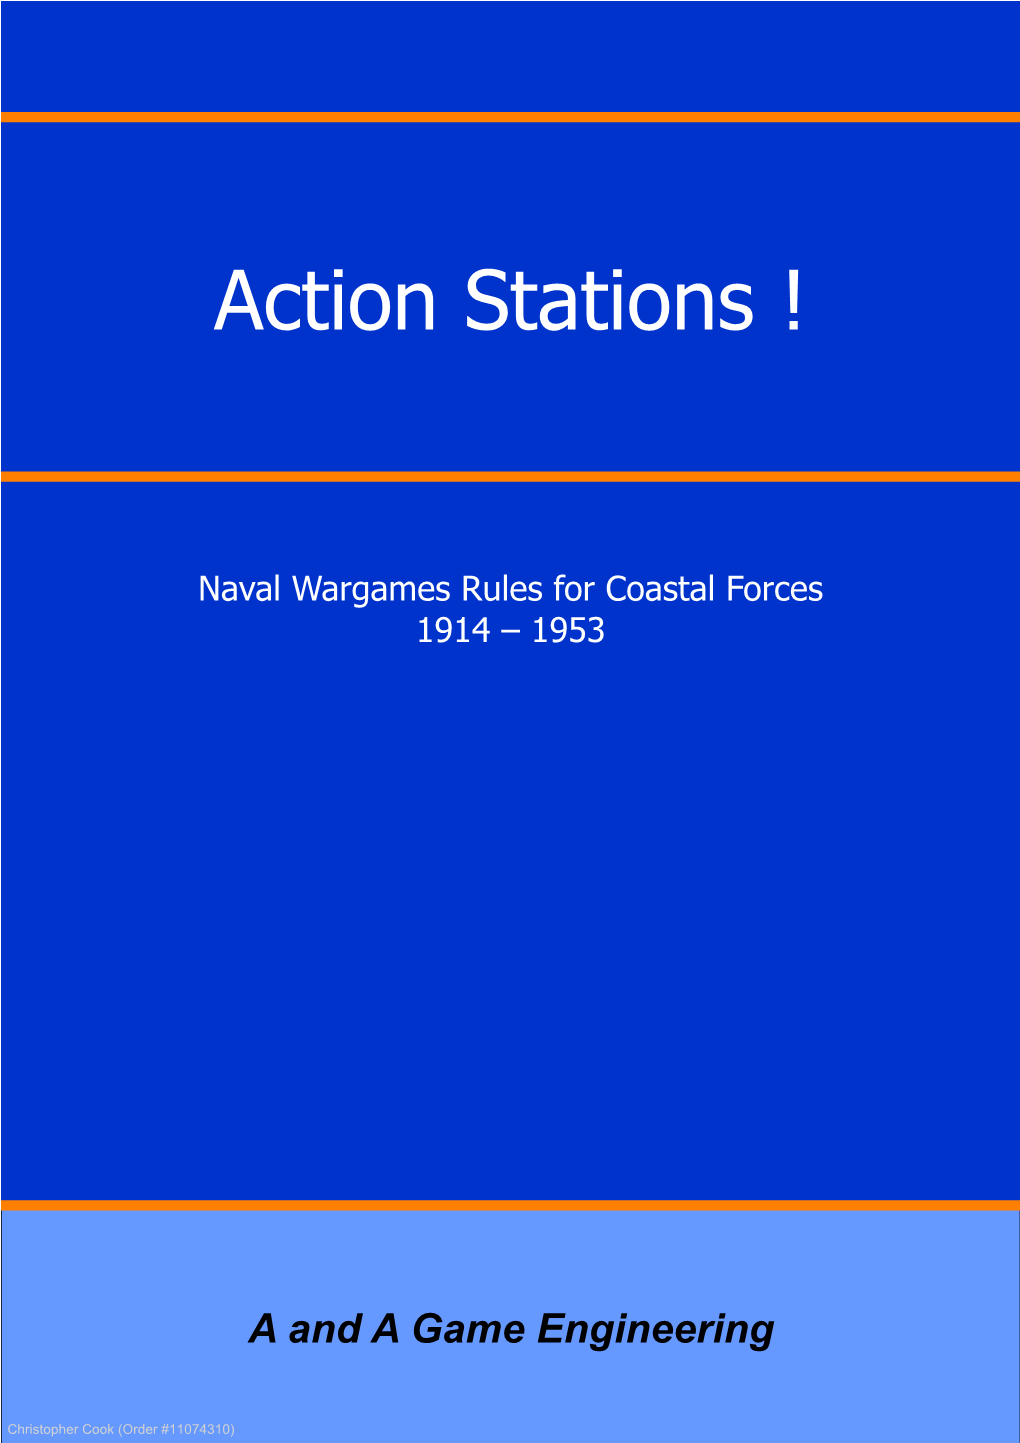 Action Stations WV 4 0.Pub